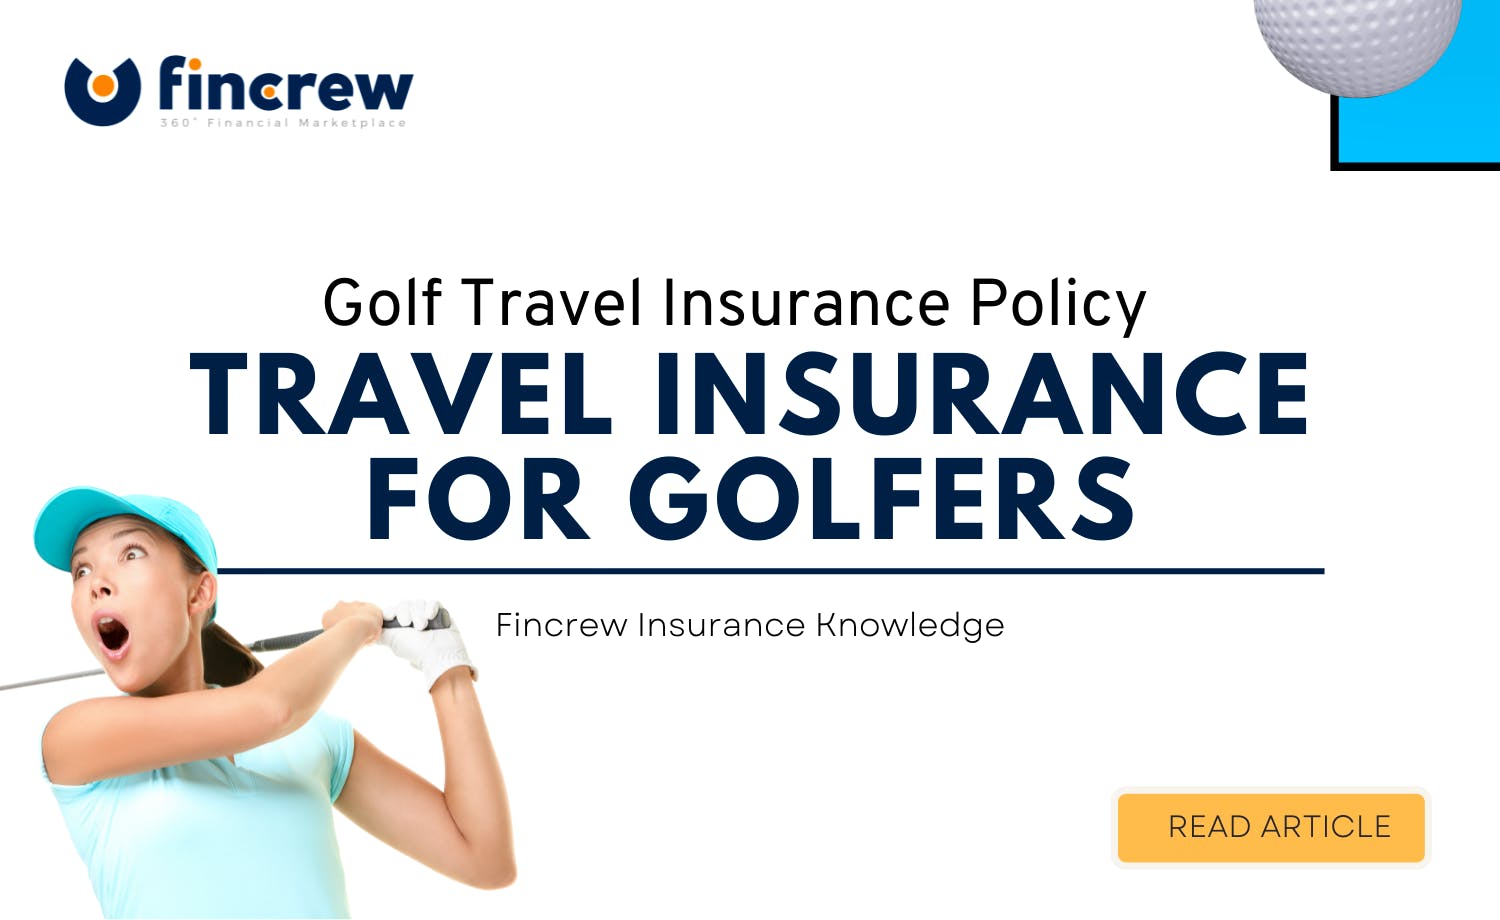 Travel Insurance For Golfers